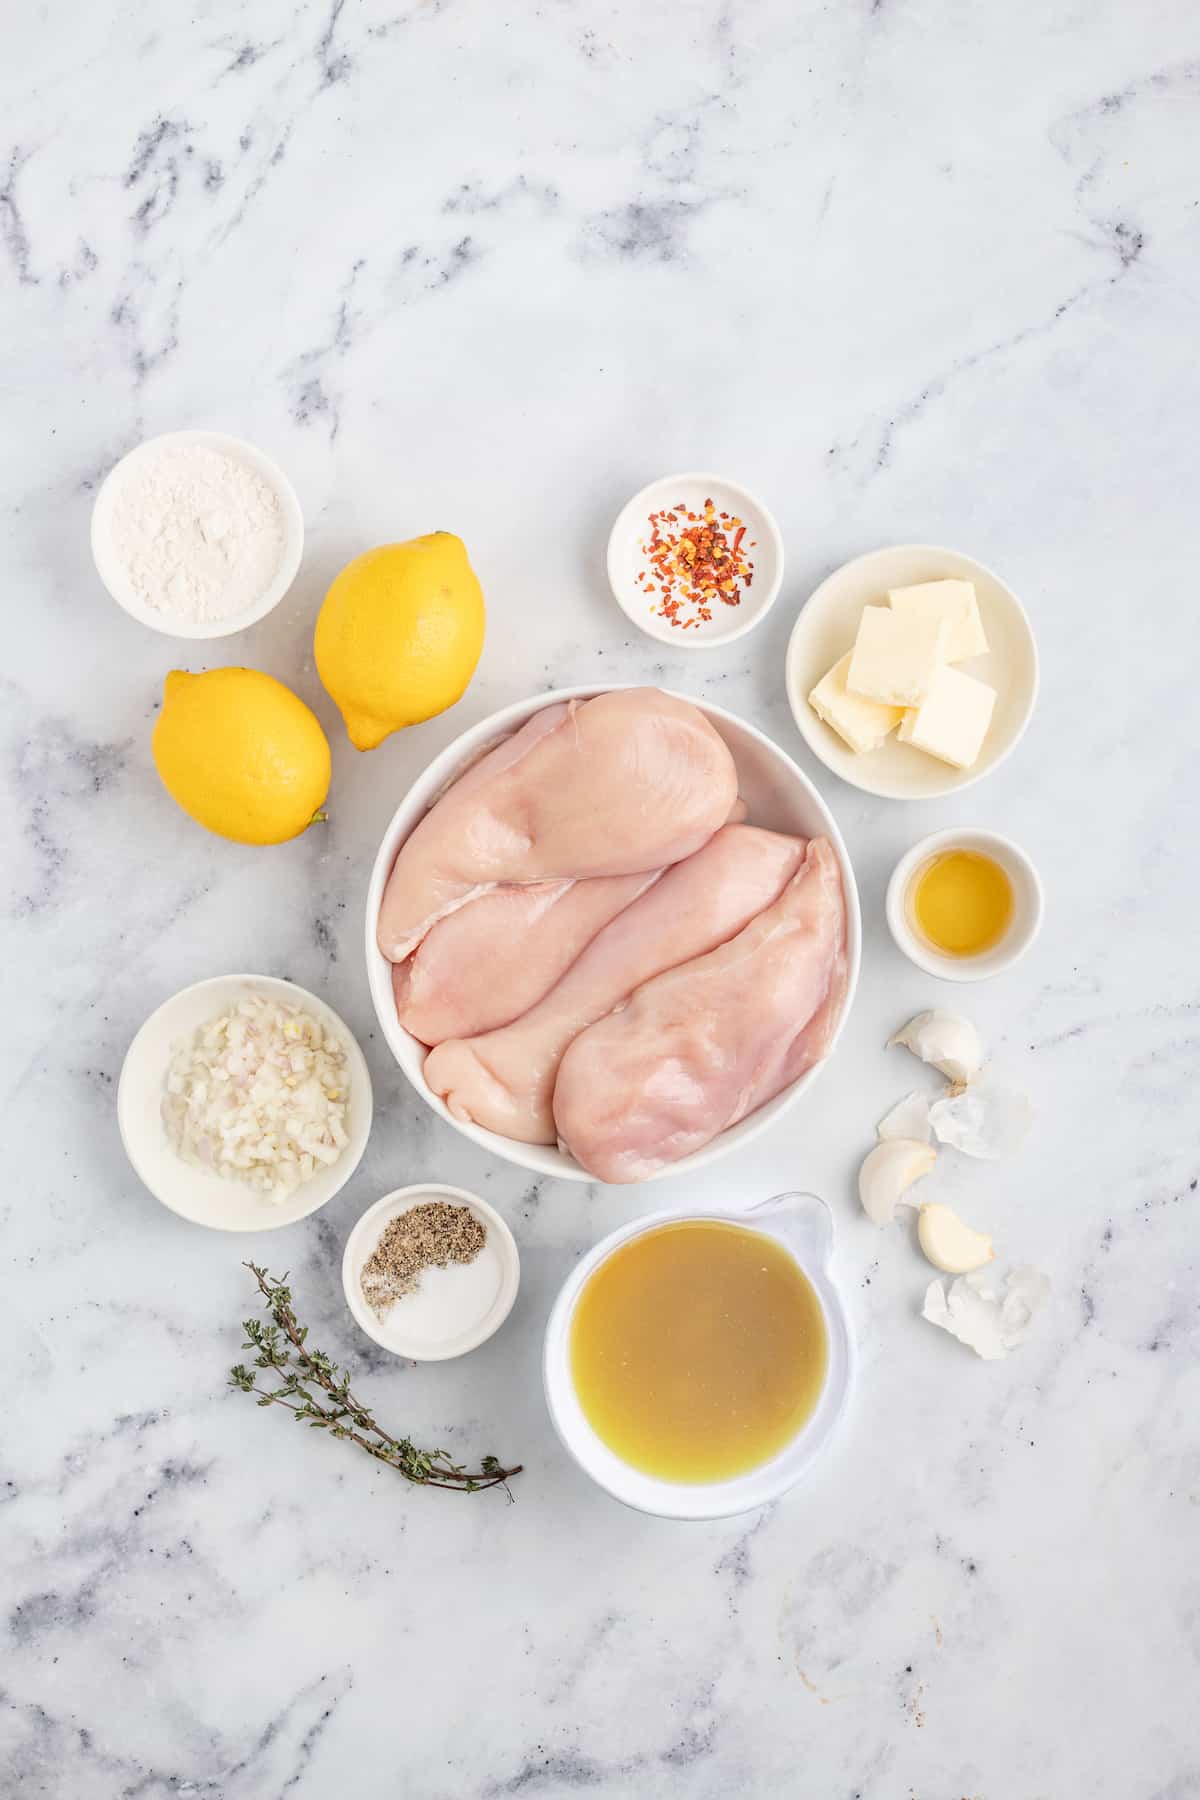 Ingredients for lemon chicken.